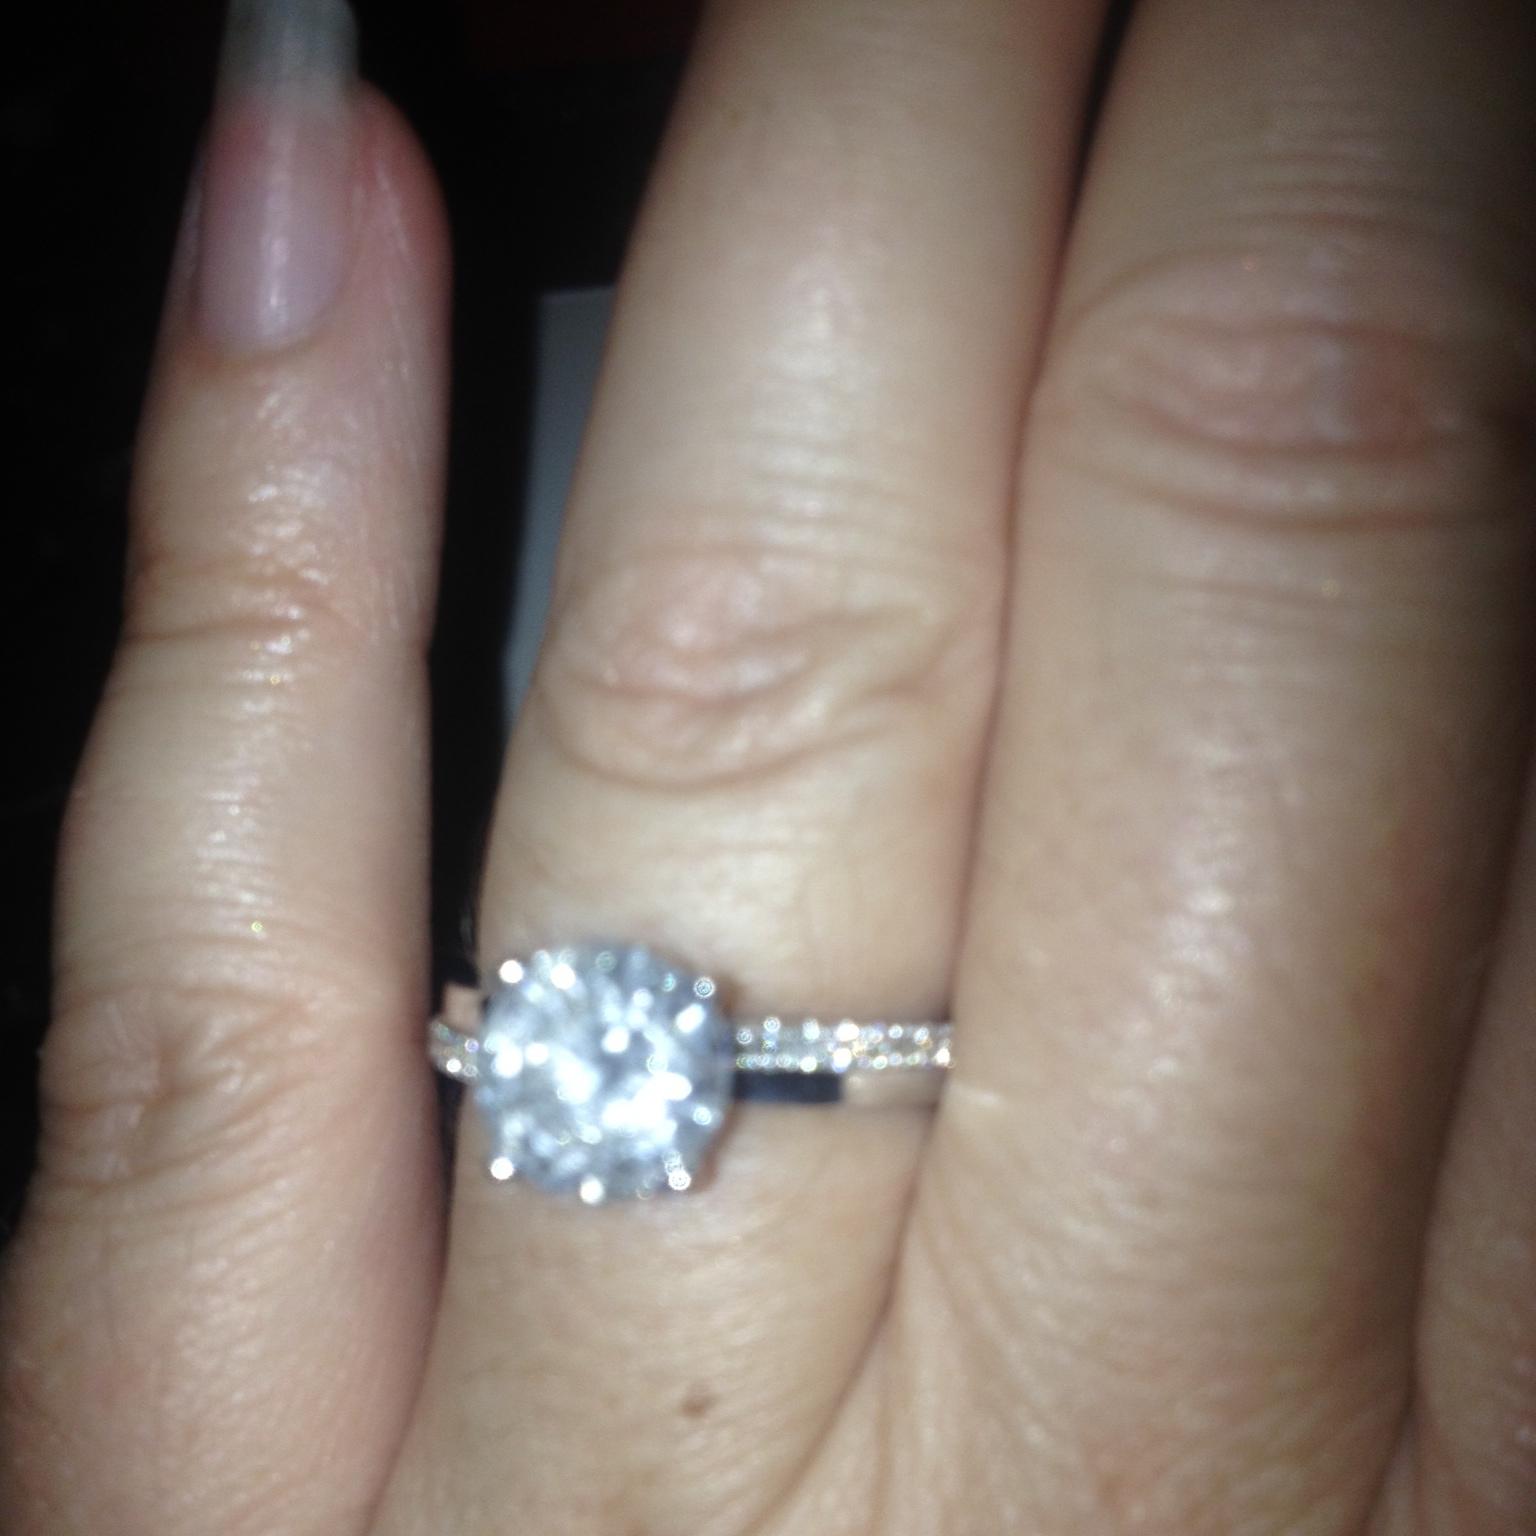 Big Rich Texas Star Melissa Poe is Engaged!